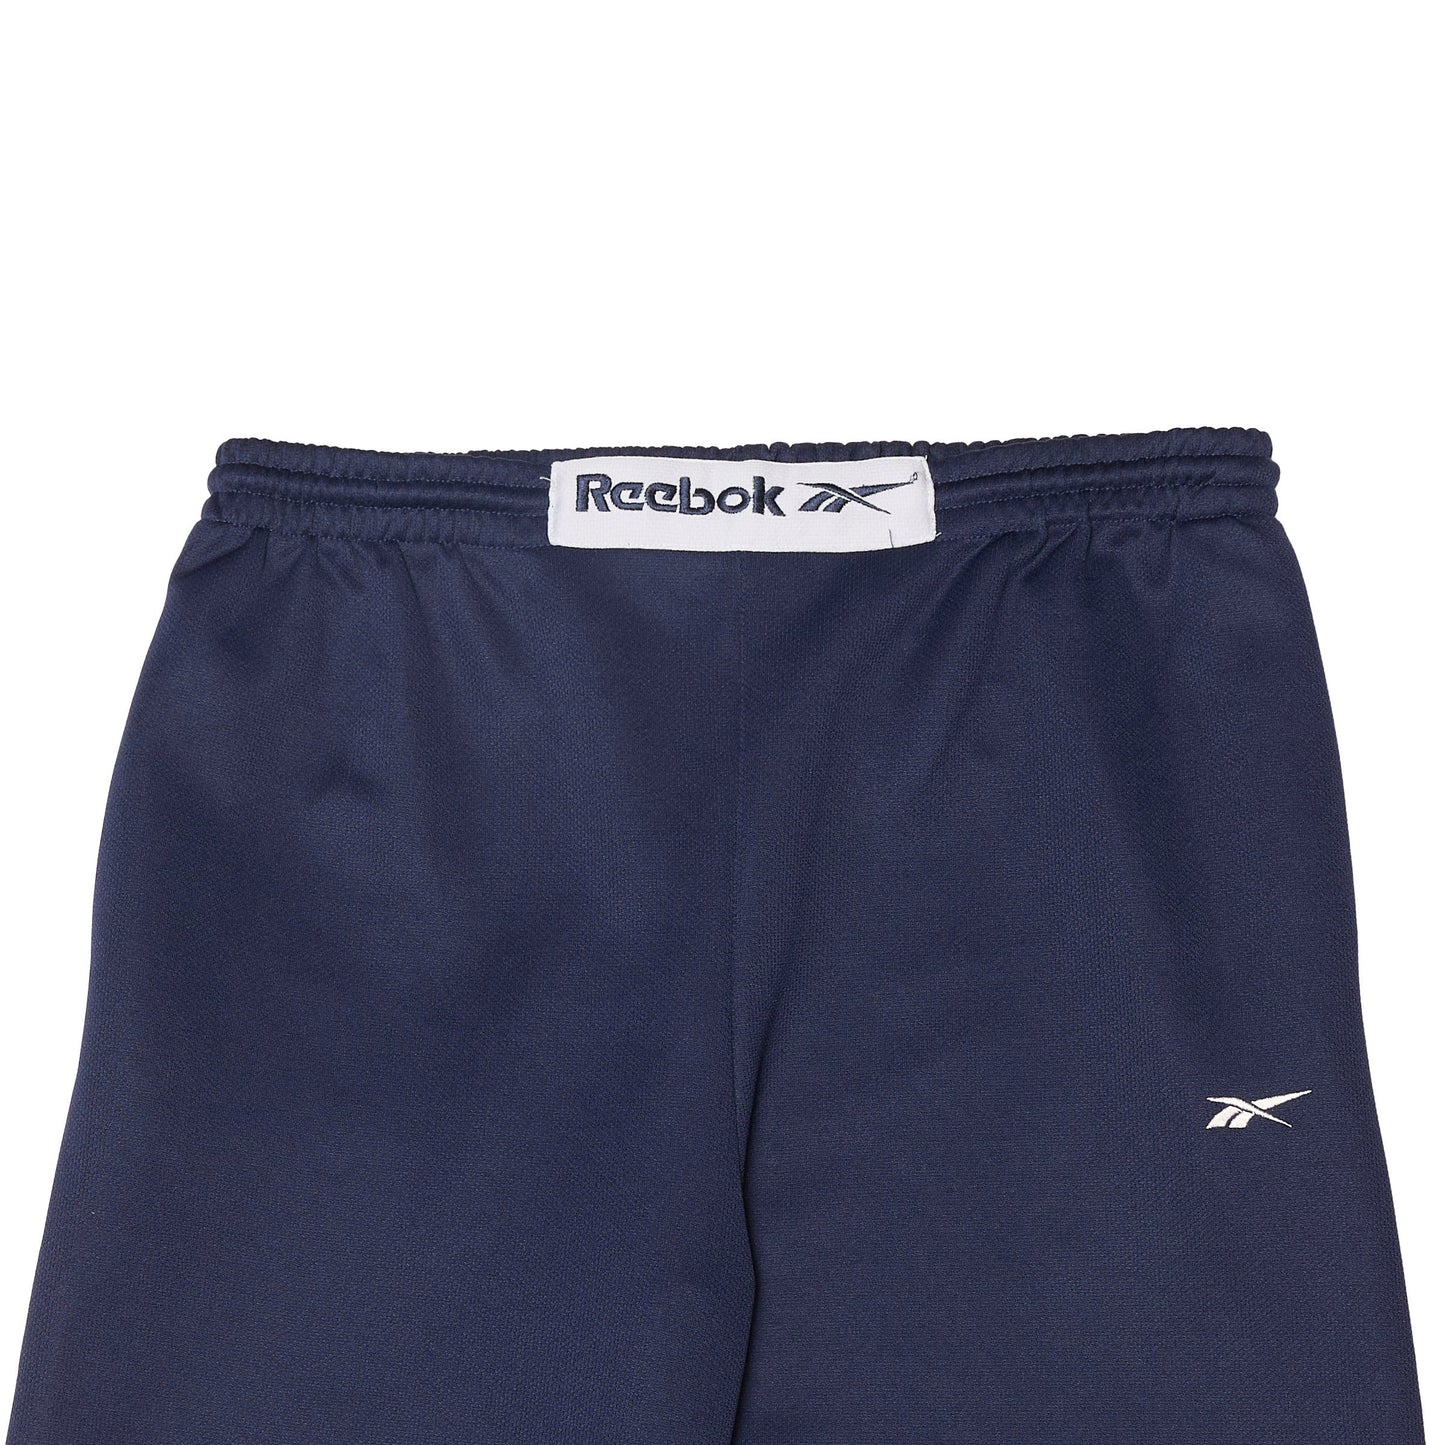 Reebok Track Pants - XL